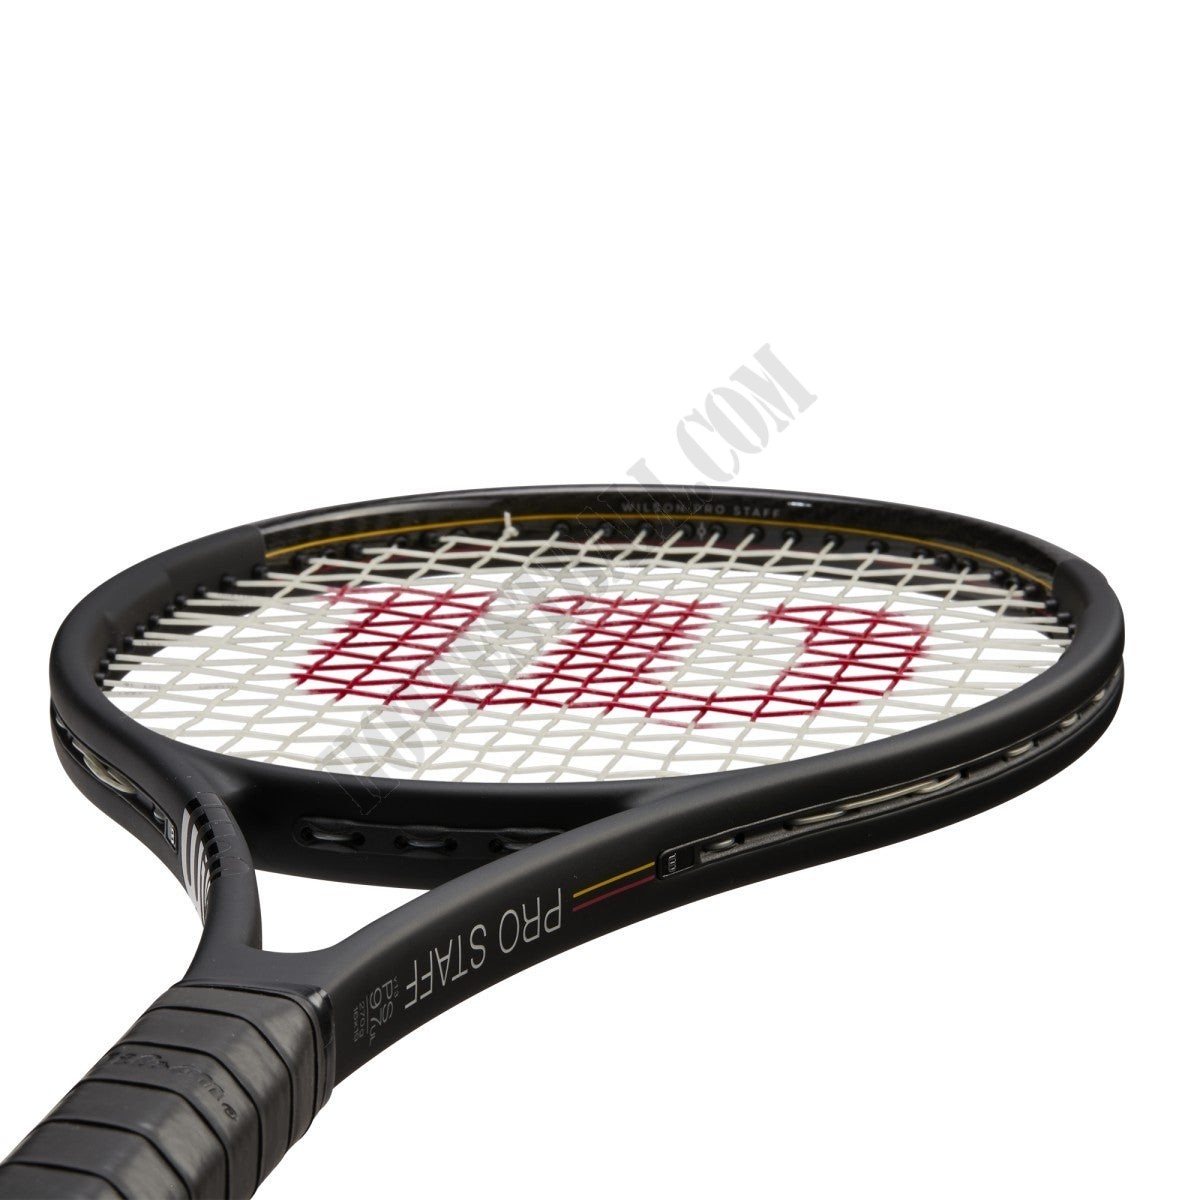 Pro Staff 97UL v13 Tennis Racket - Wilson Discount Store - -5